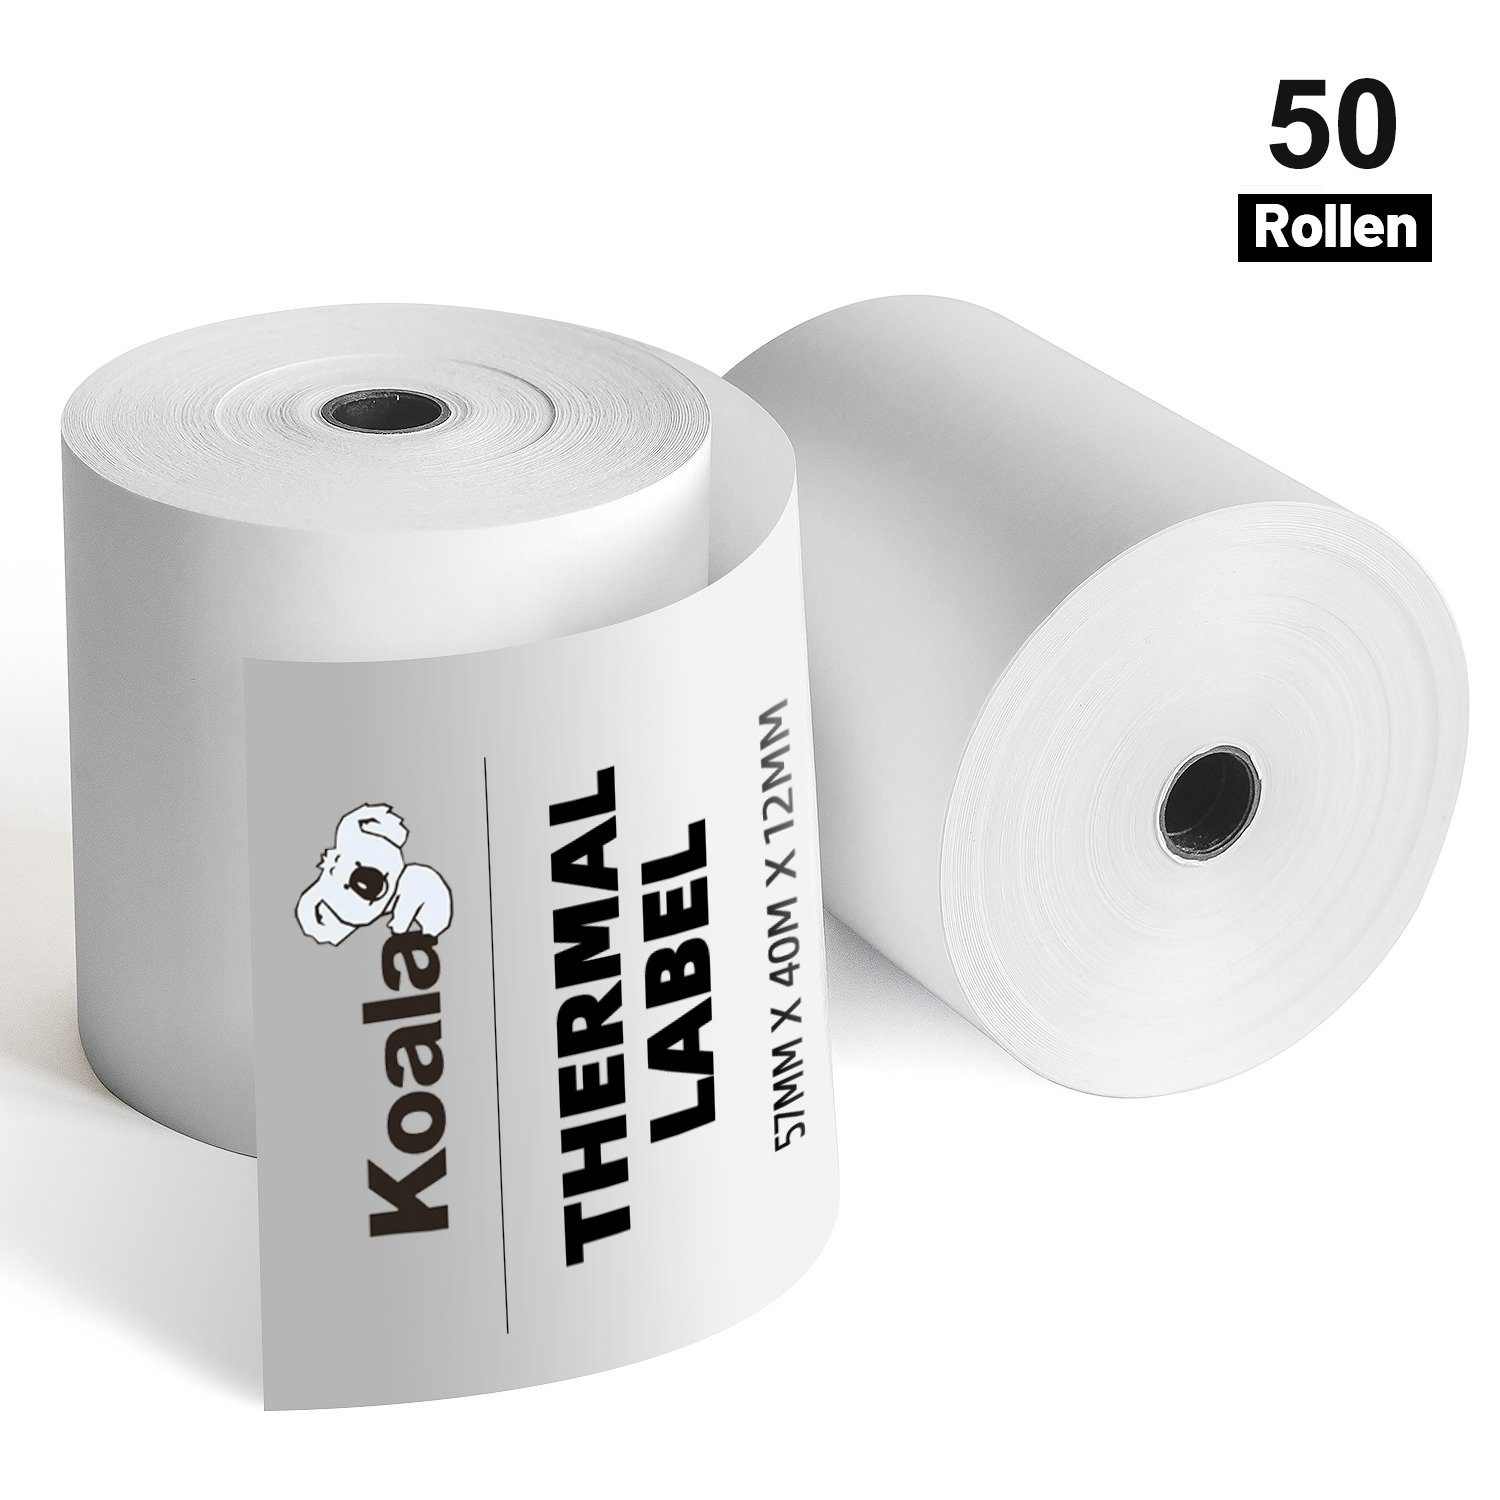 Bonrolle Rollen Koala 57 Drucker x 40 Etikettenpapier Kassen, für 50 mm Thermopapier